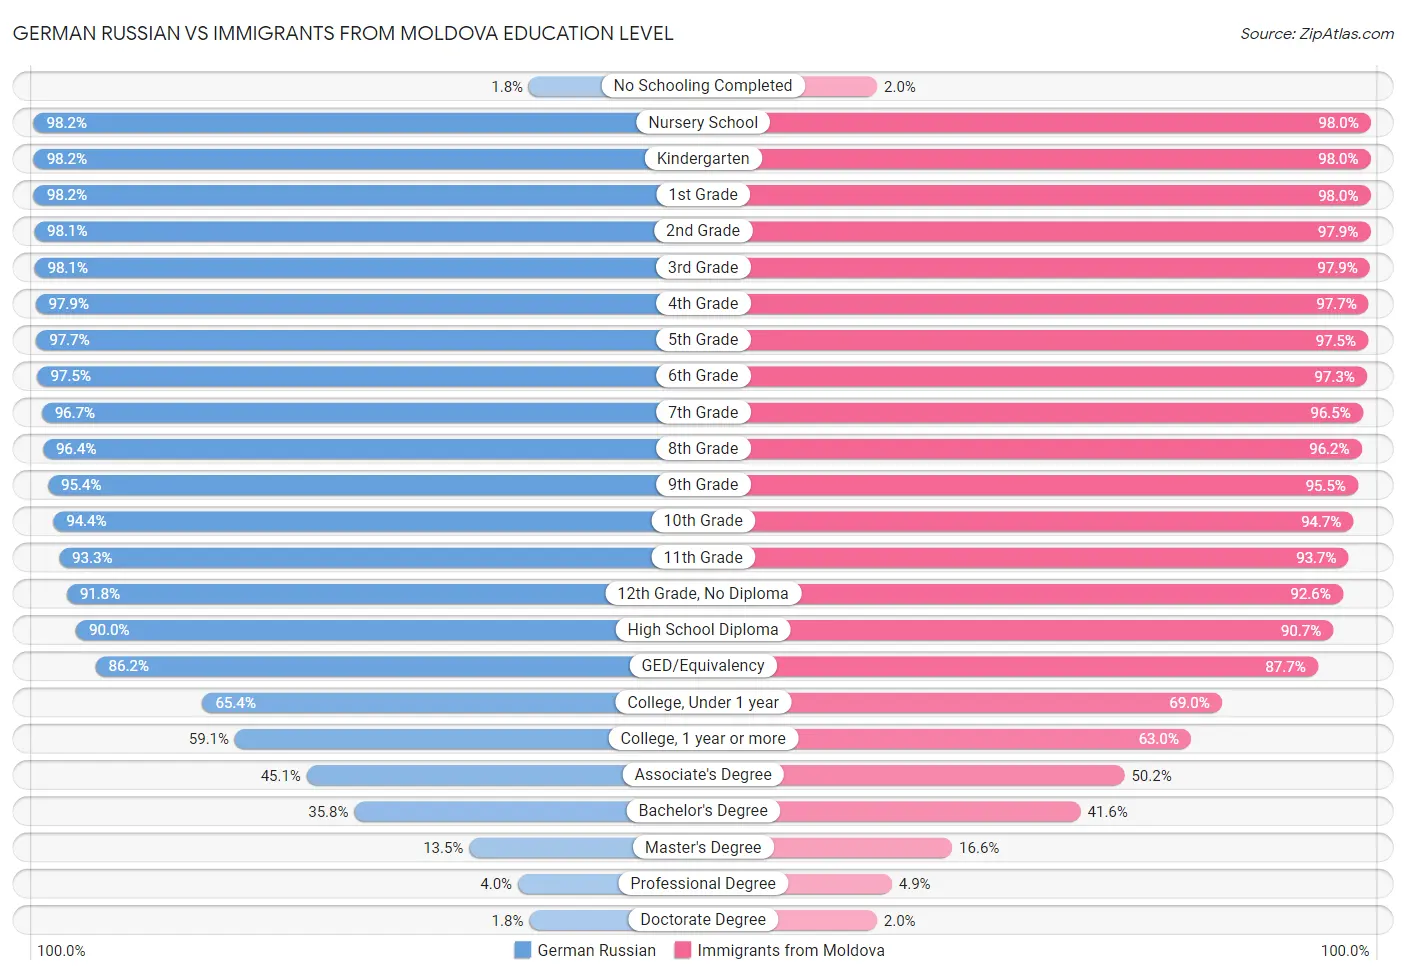 German Russian vs Immigrants from Moldova Education Level